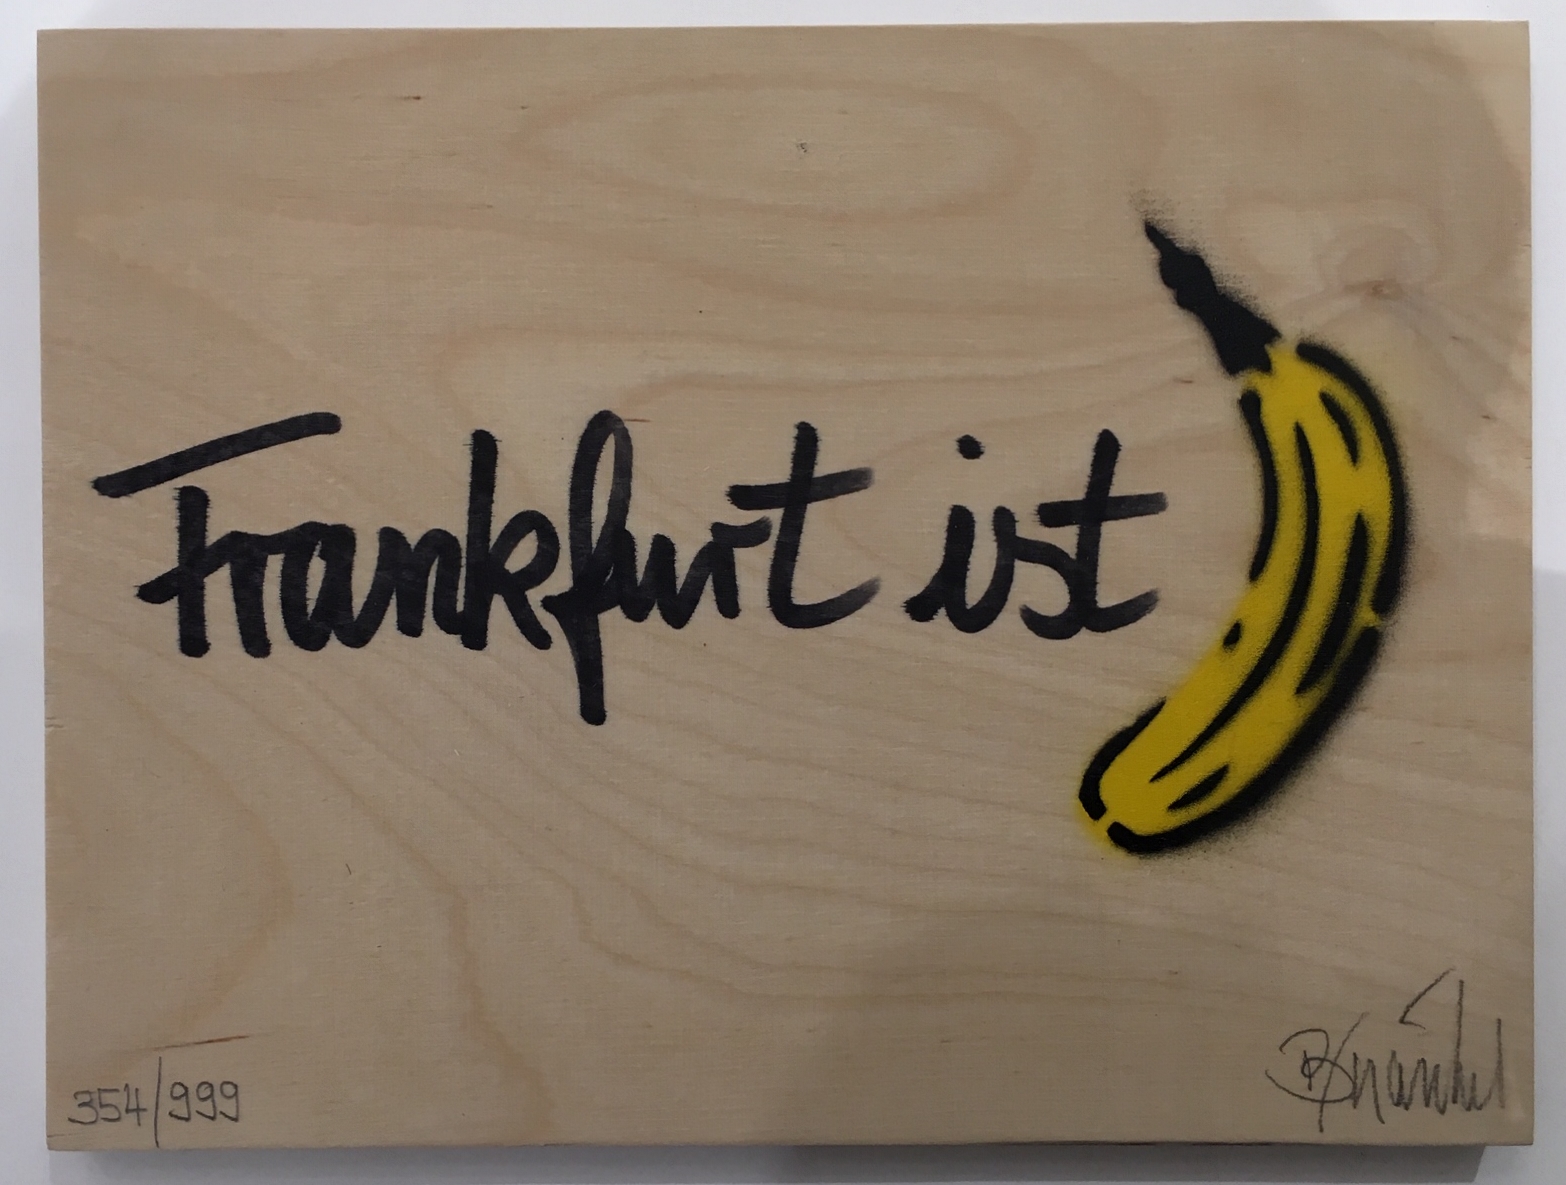 Frankfurt ist Banane